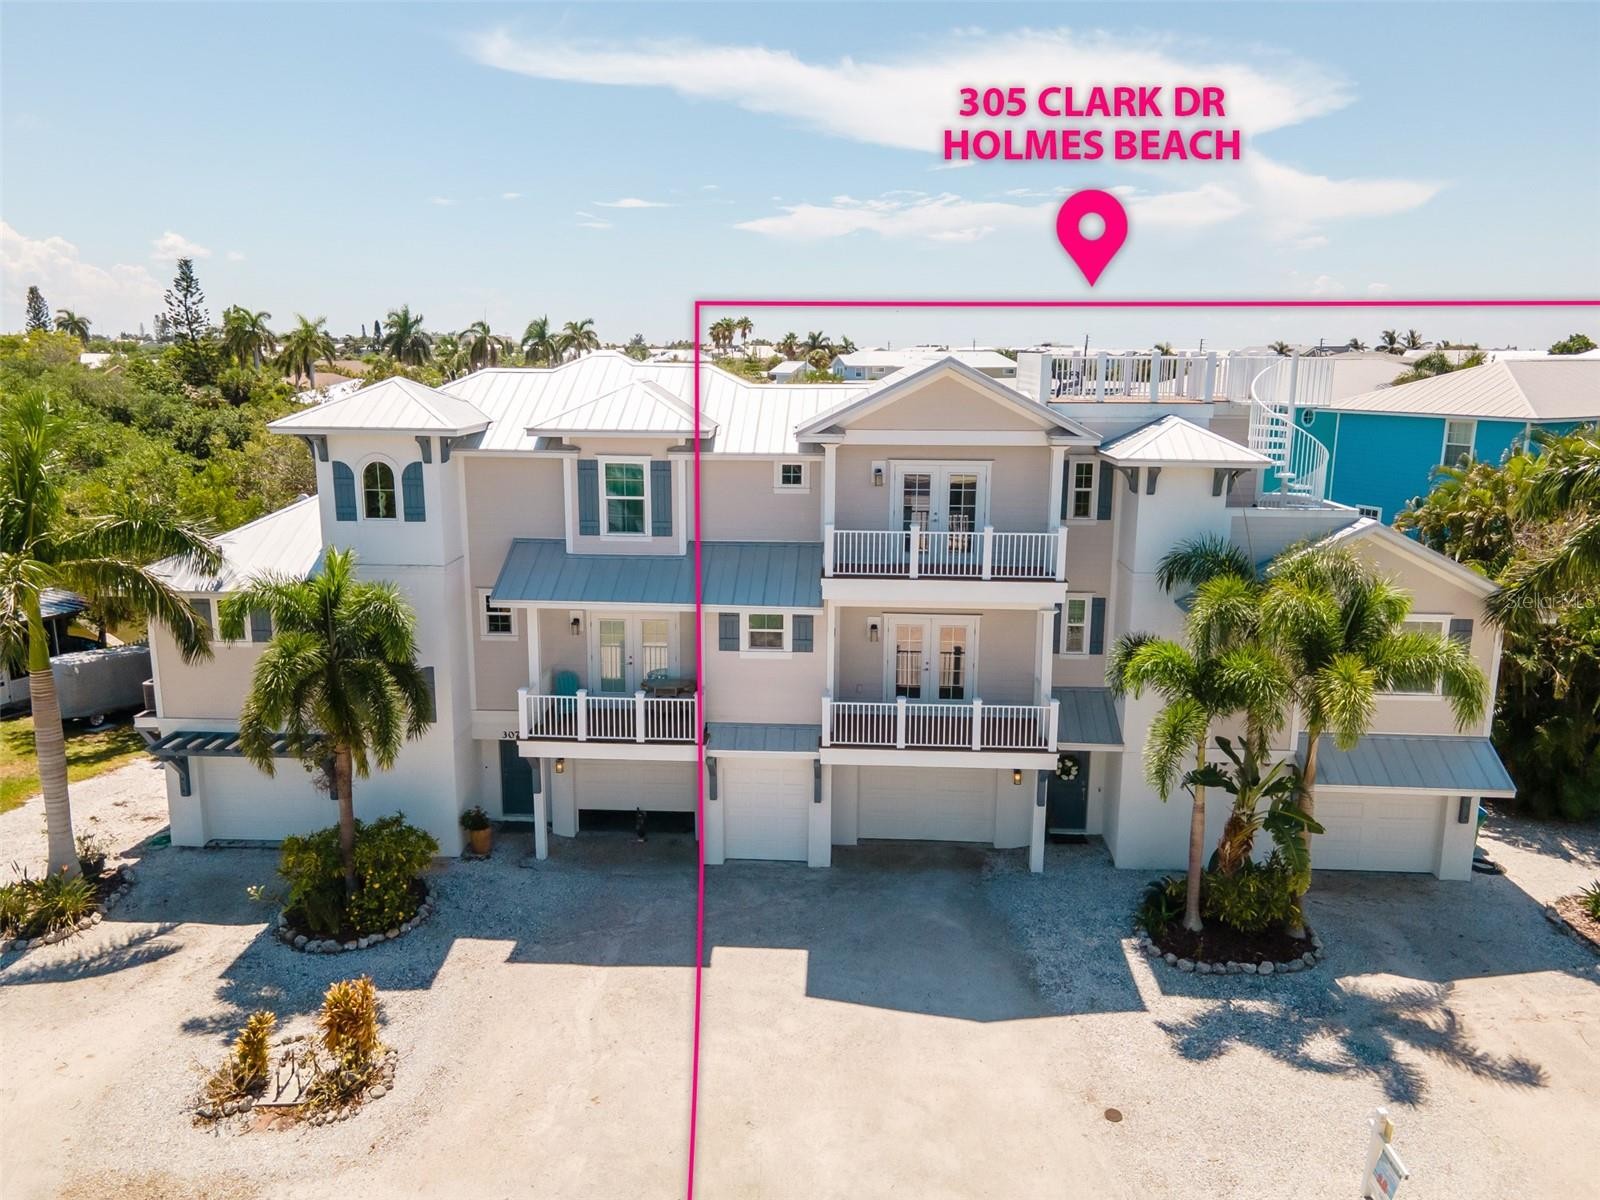 305 Clark Dr #305 Holmes Beach Florida 34217